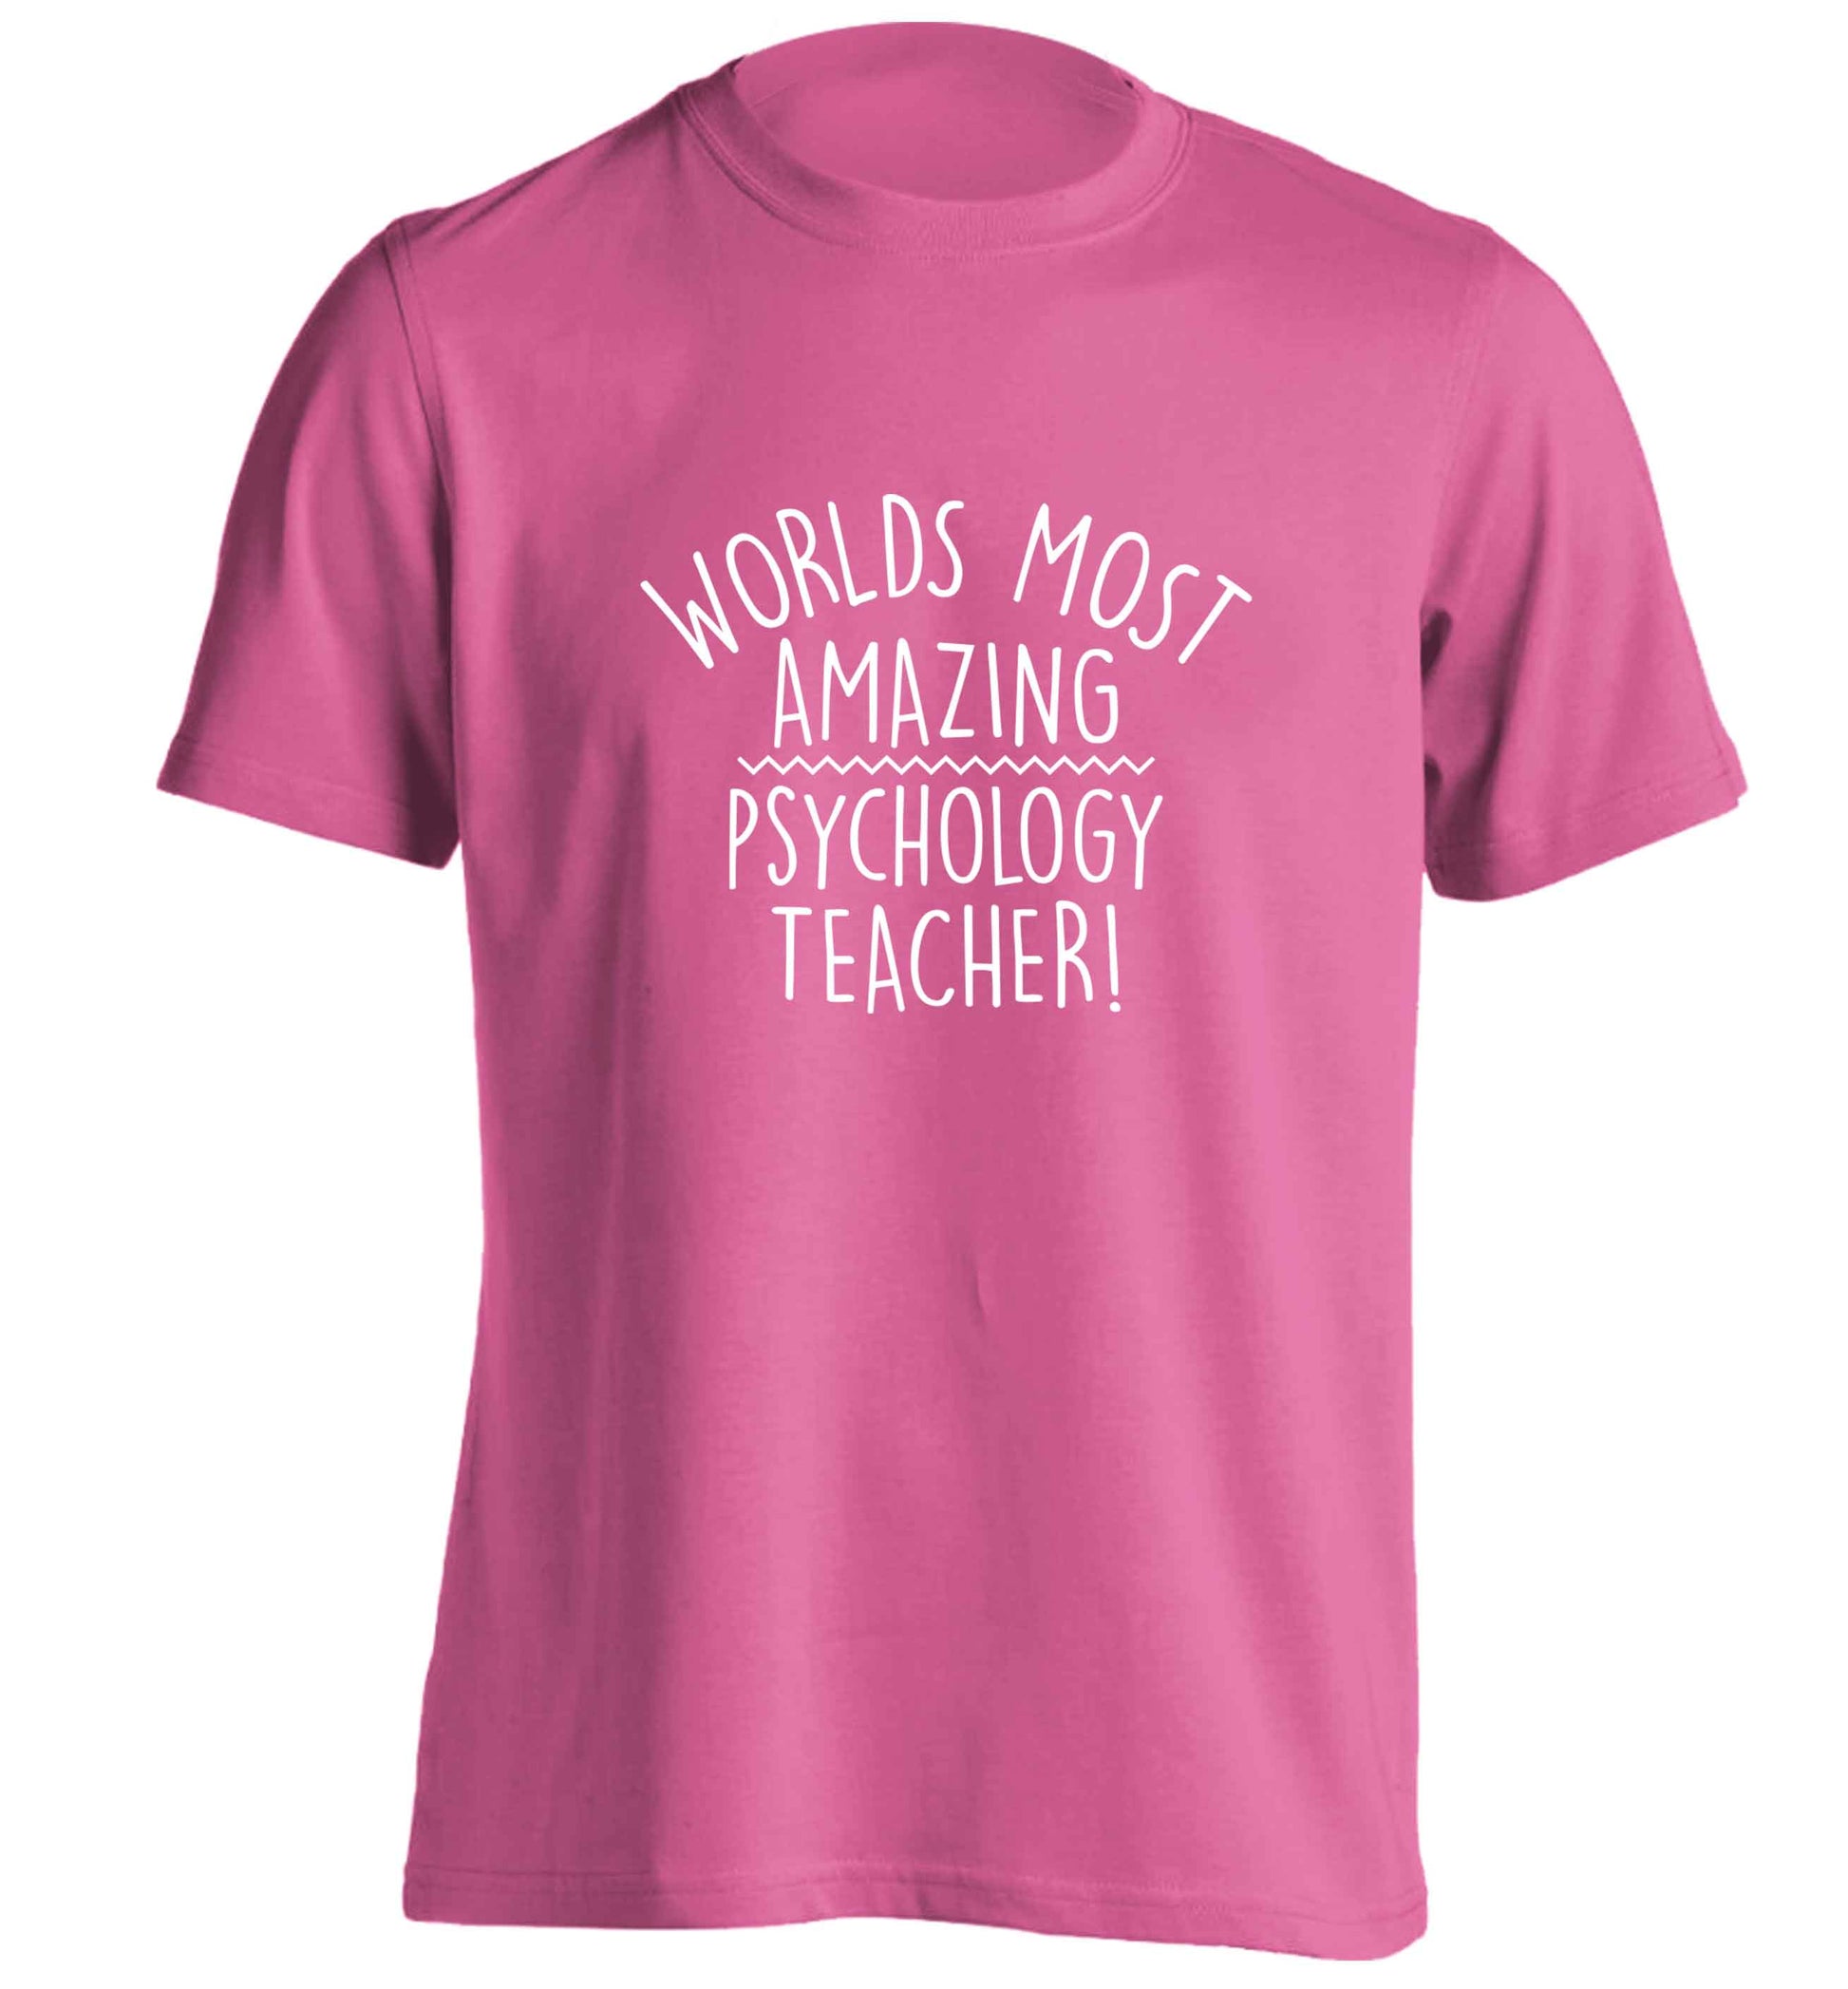 Worlds most amazing psychology teacher adults unisex pink Tshirt 2XL